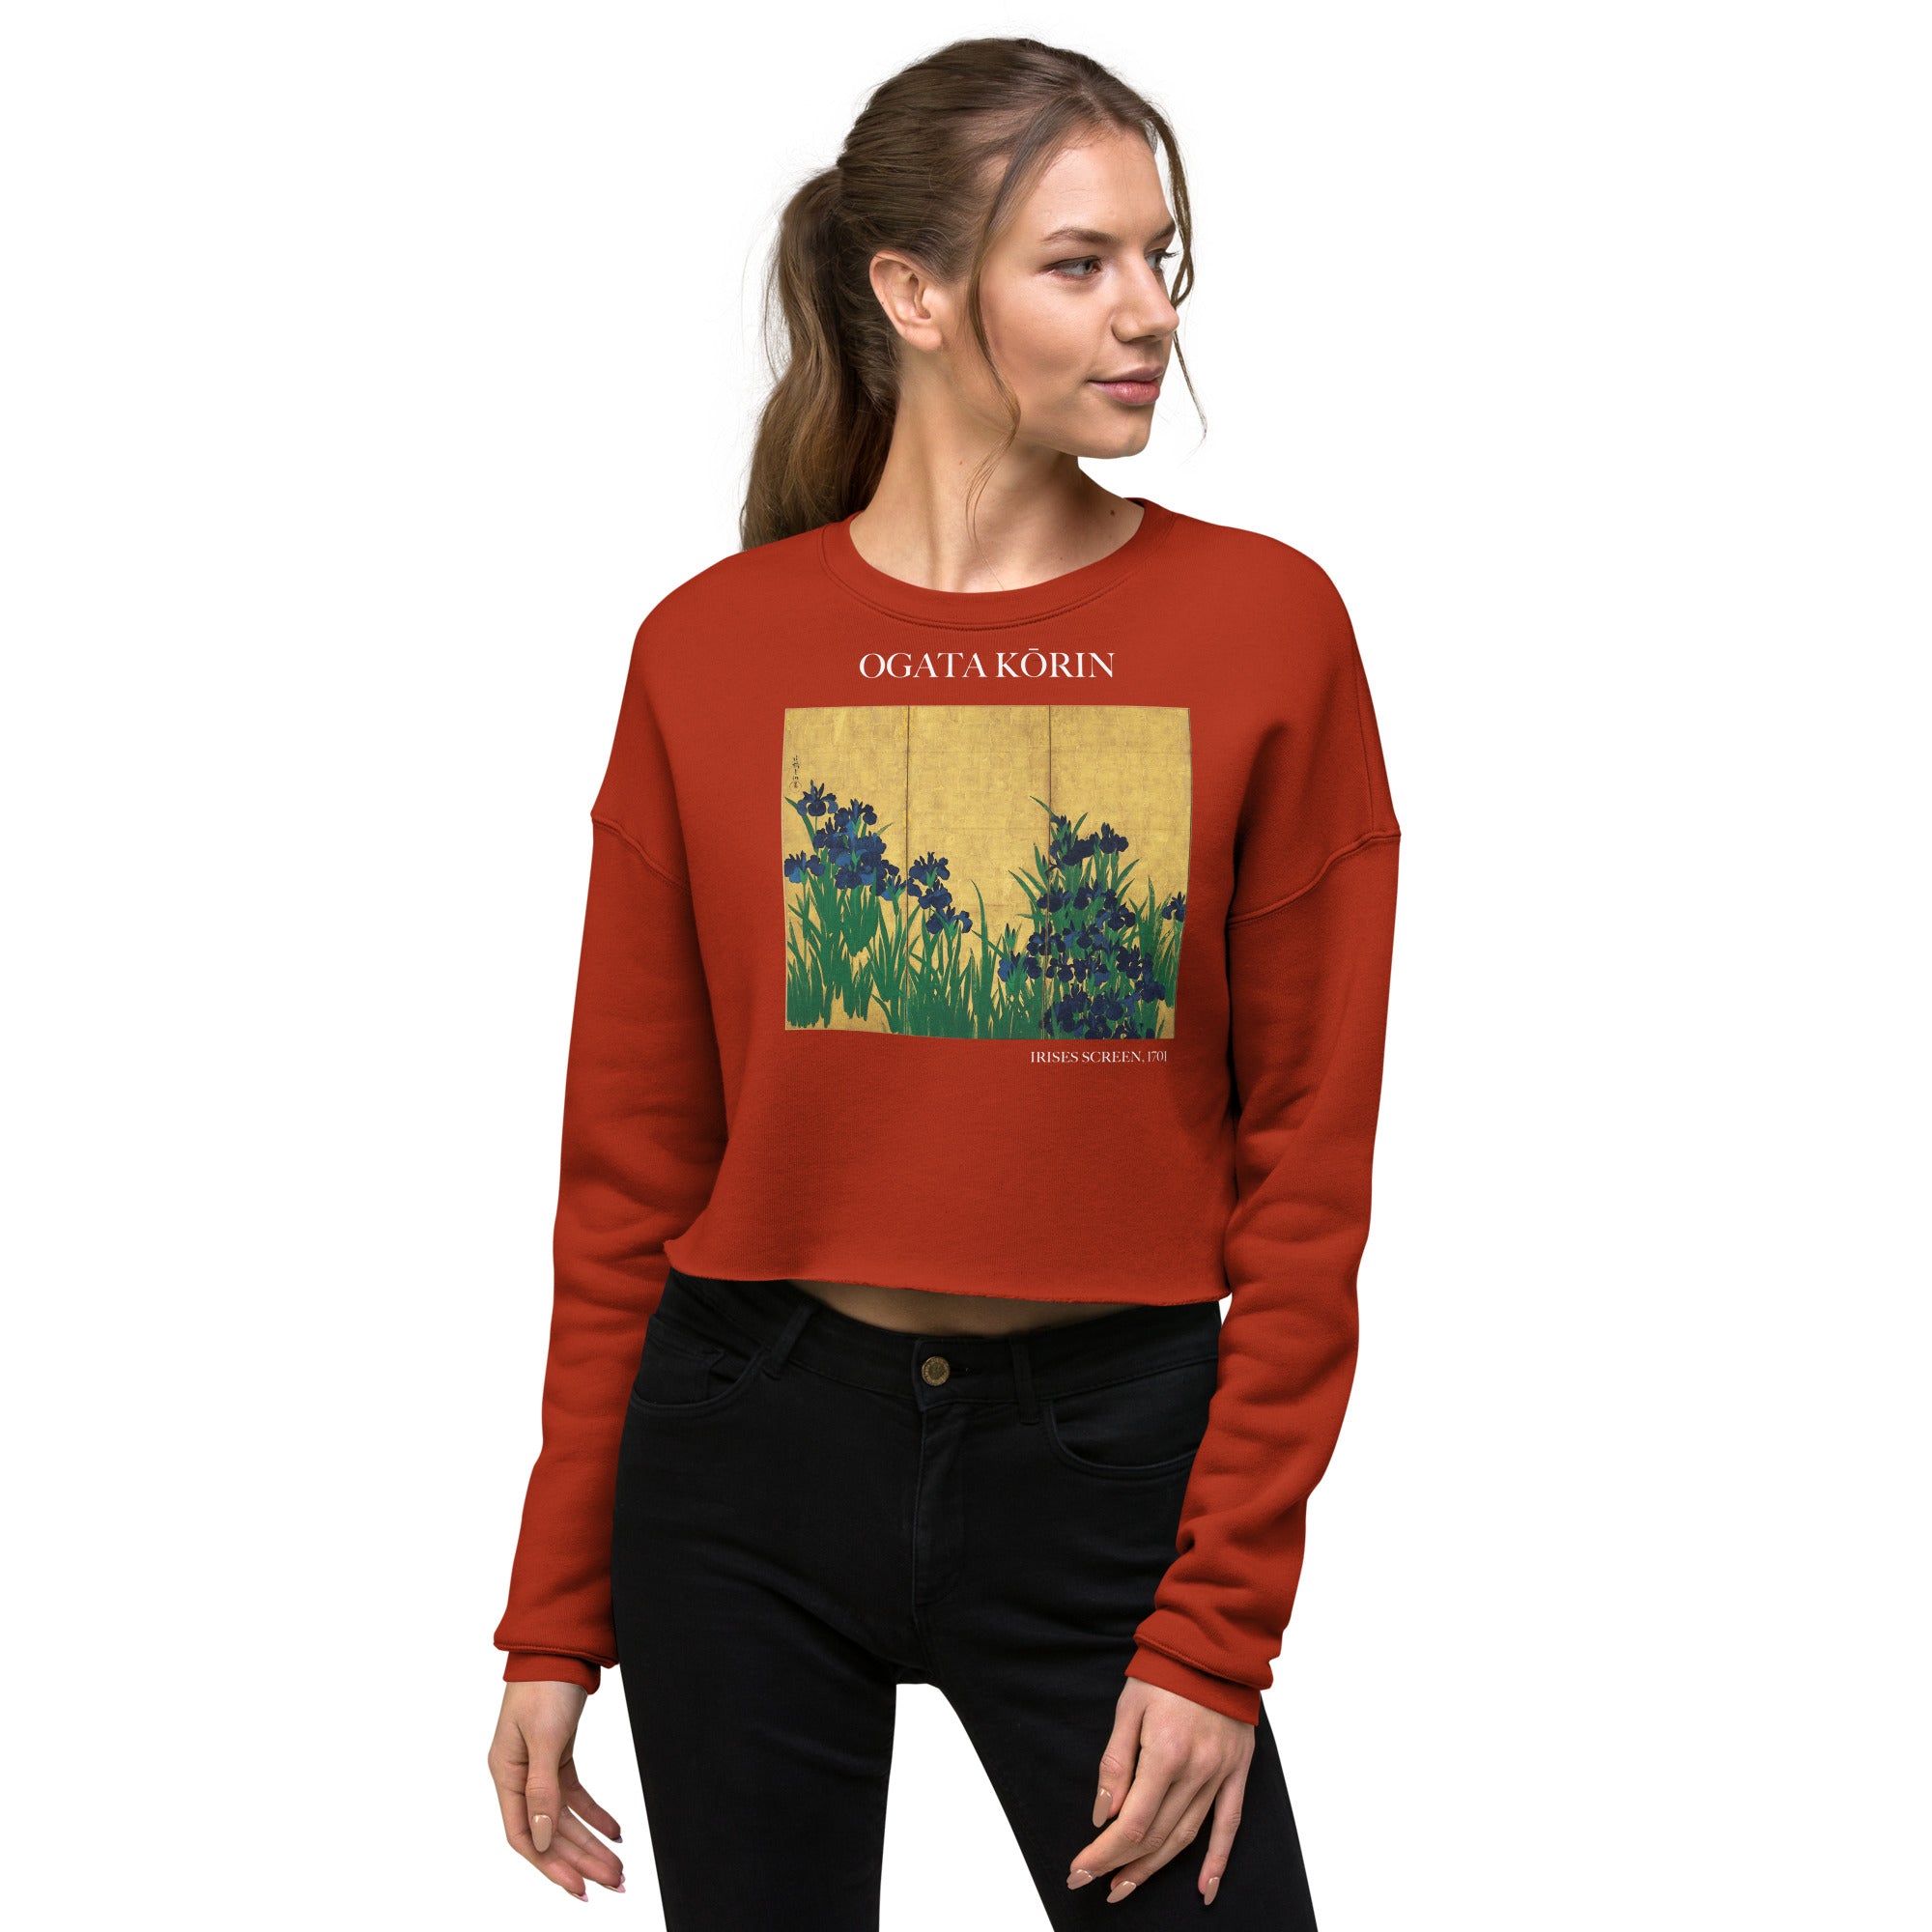 Ogata Kōrin 'Irises Screen' Famous Painting Cropped Sweatshirt | Premium Art Cropped Sweatshirt